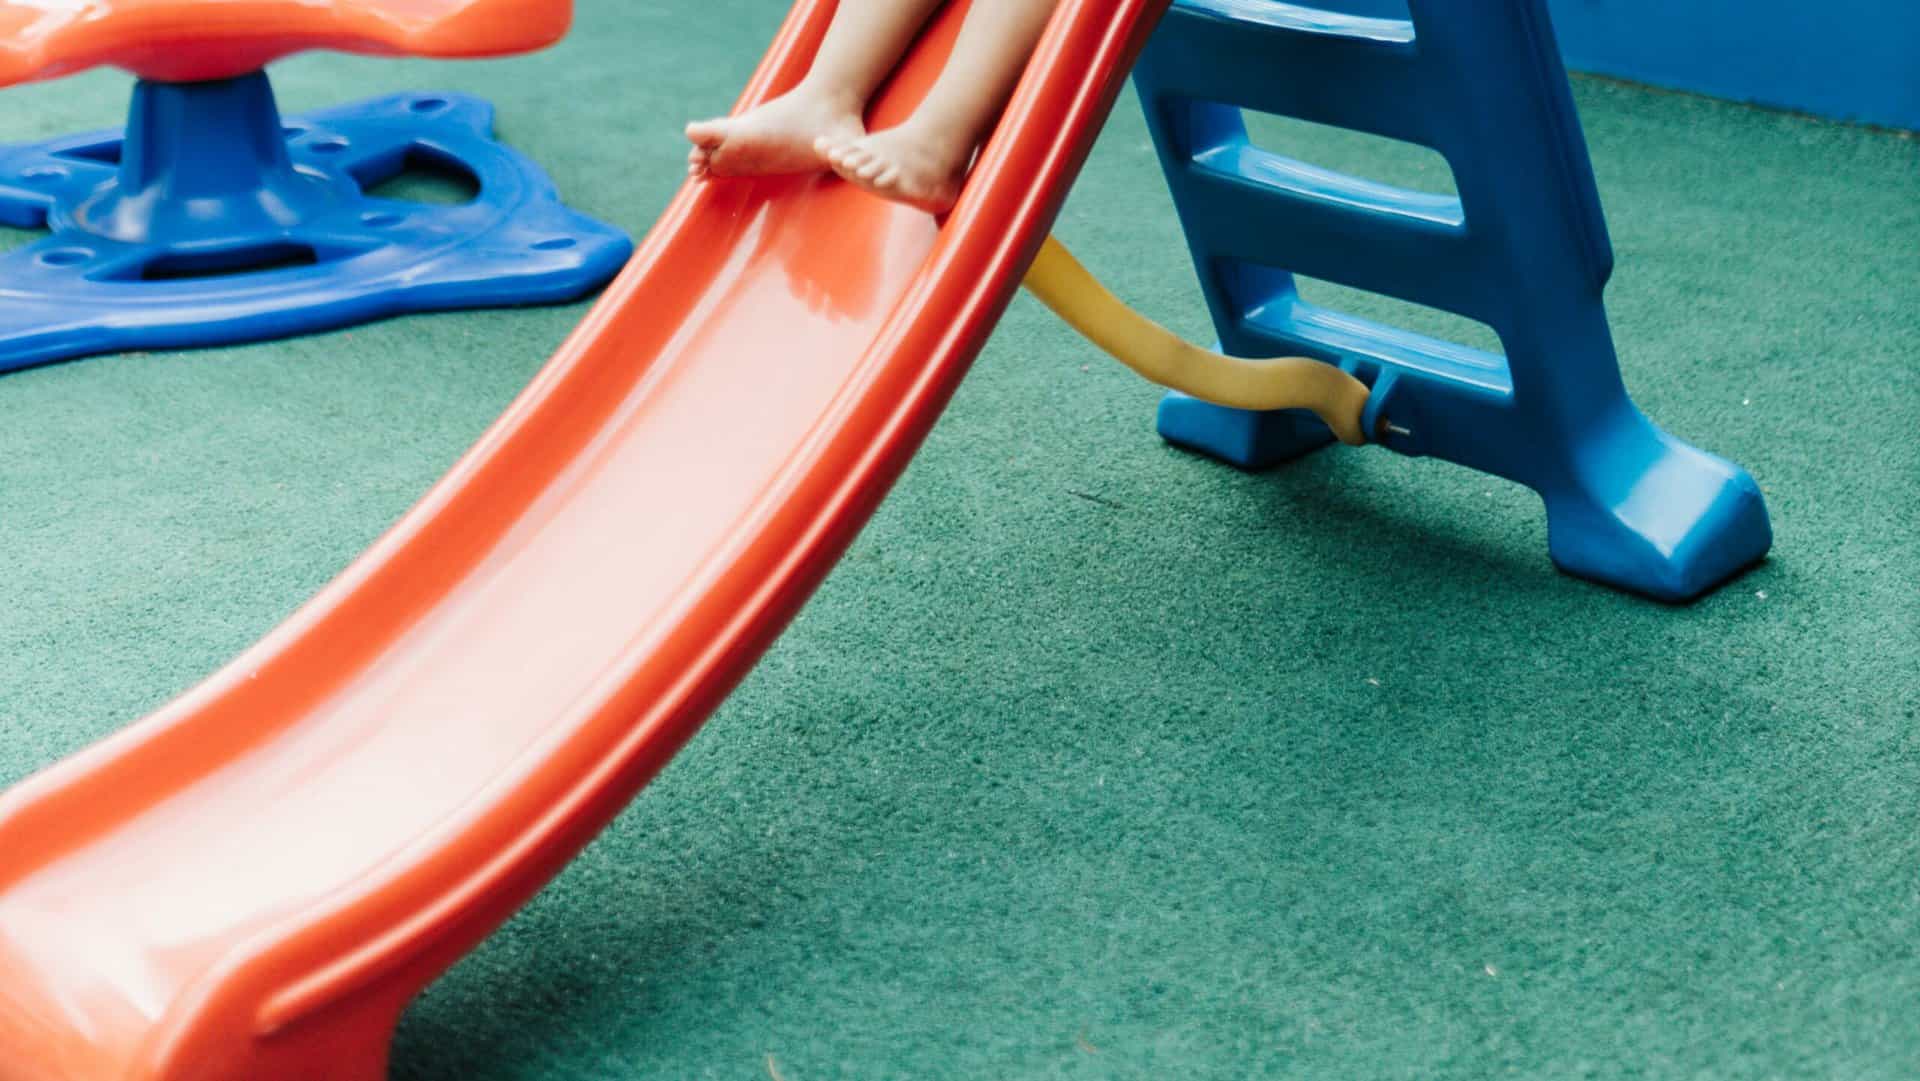 Slide on artificial grass playground